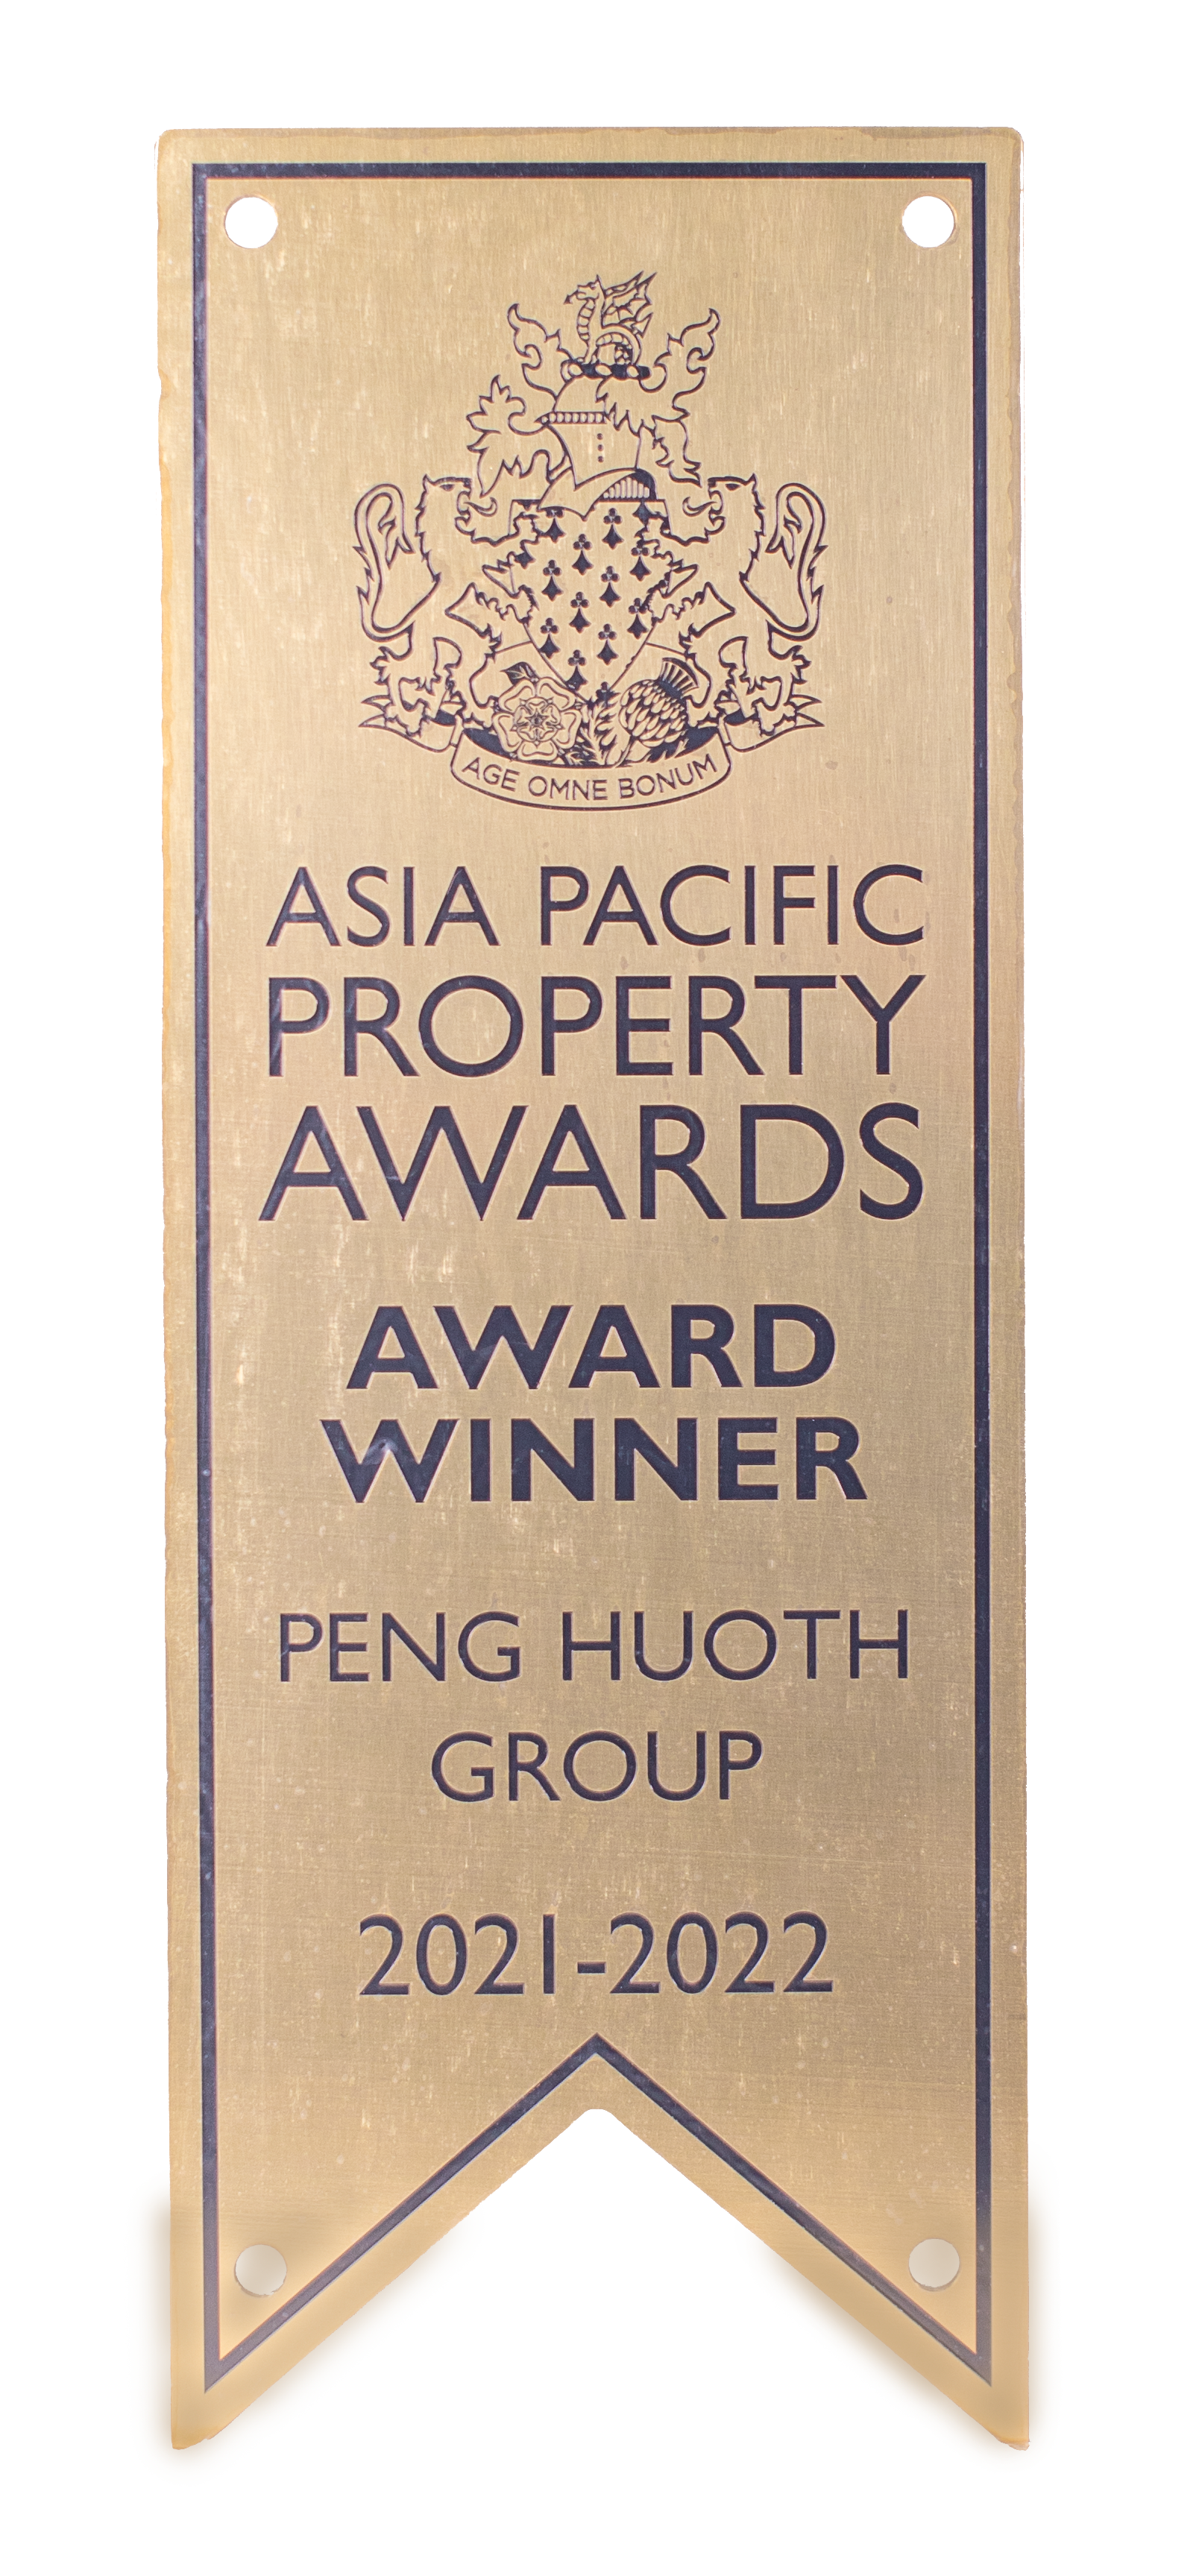 Asia Pacific Property Awards Winner Peng Huoth Group